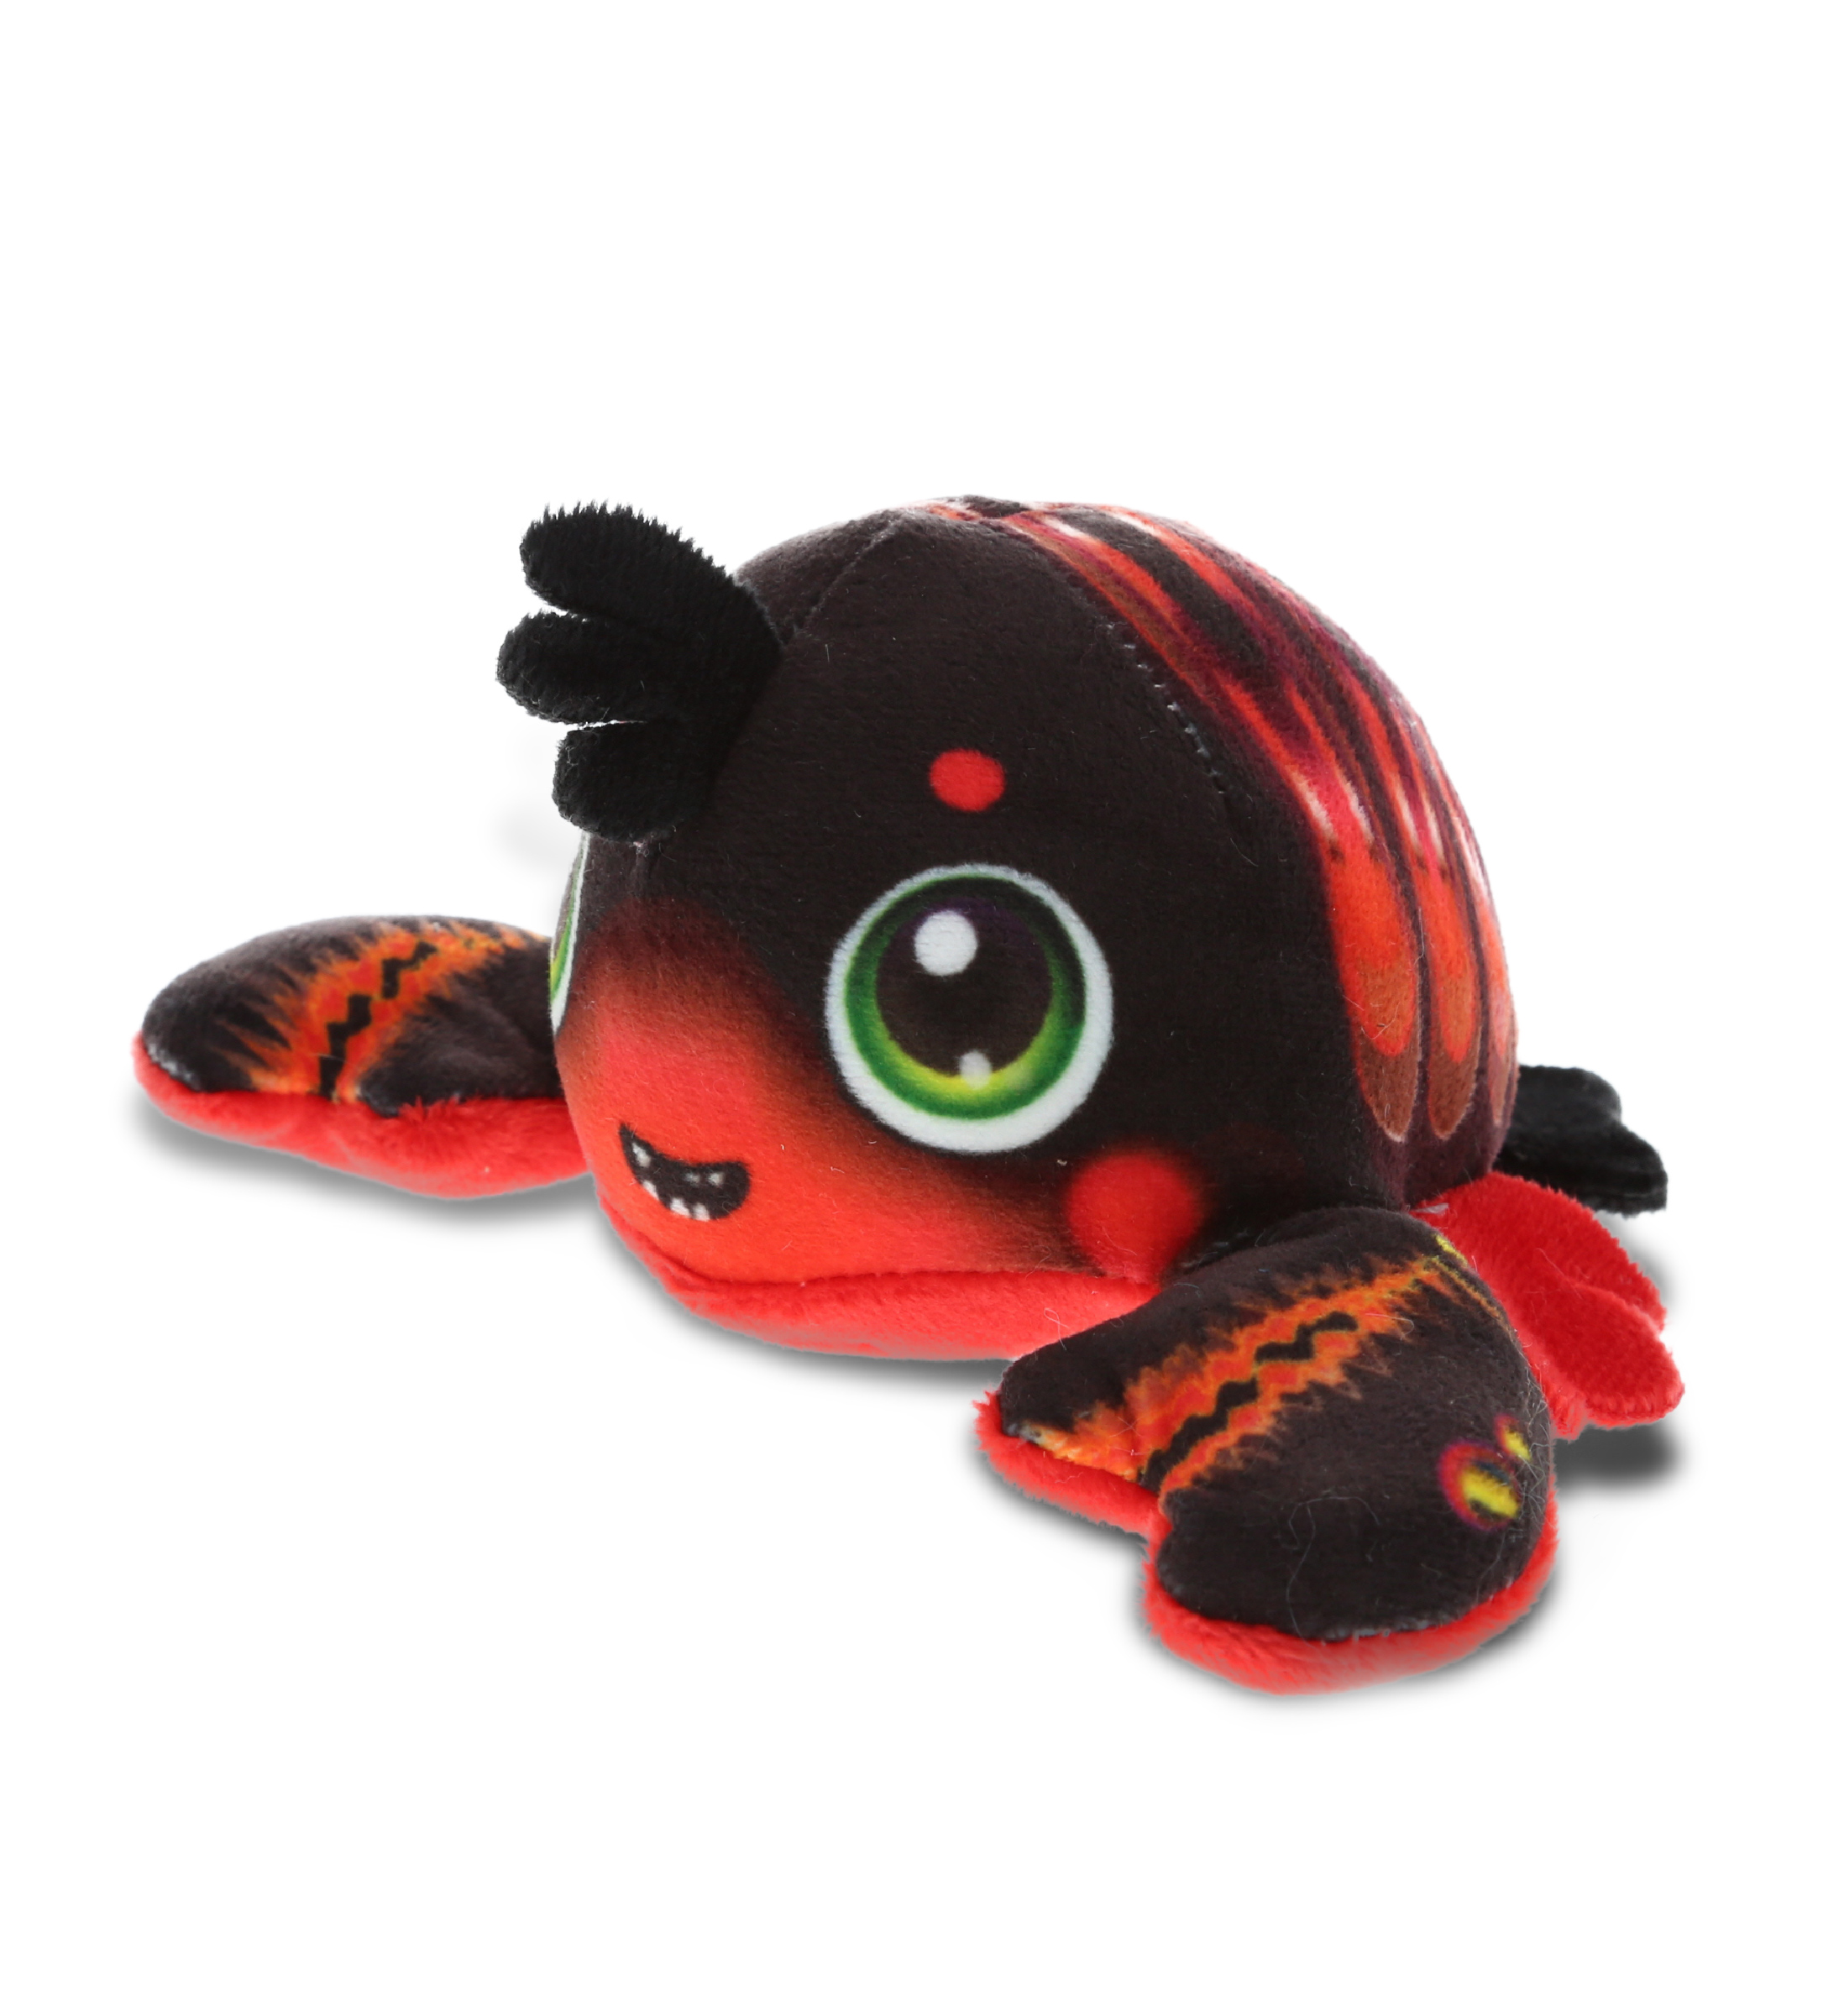 Cute Lifelike Marine Life Plush Toy Stuffed Fish Crab Lobster Doll Kids Gift